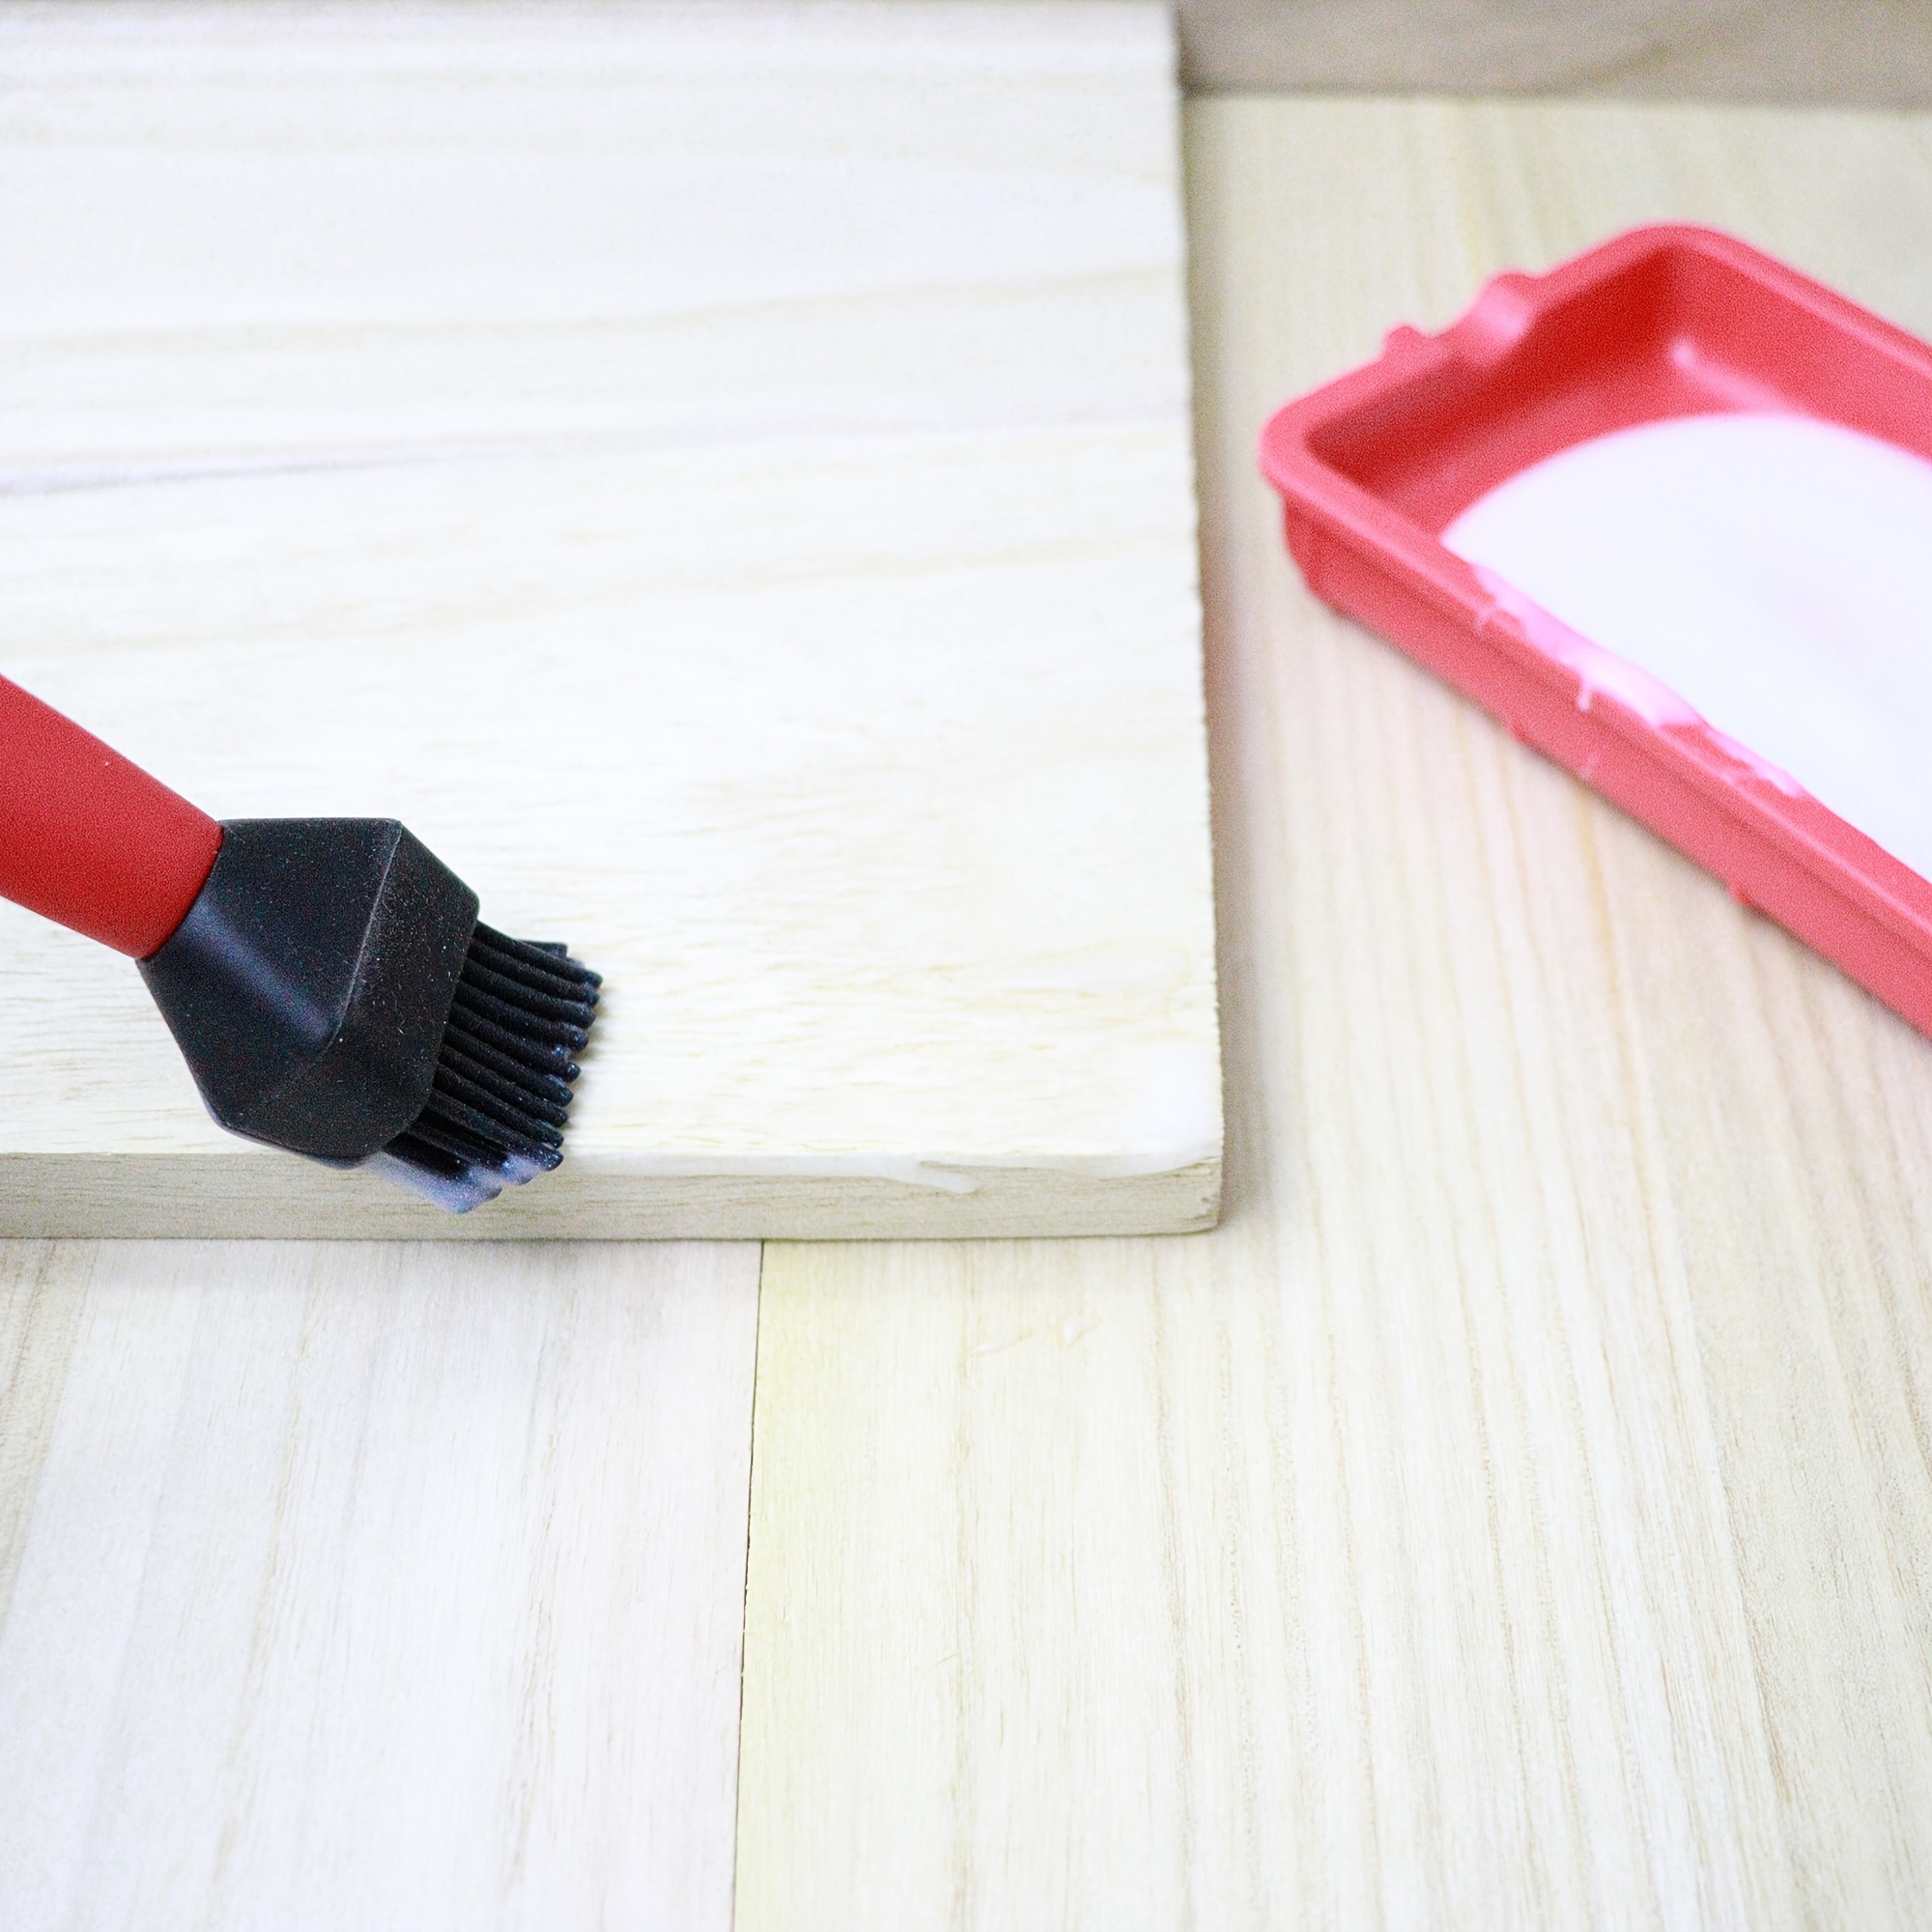  Rockler Wood Glue Applicator SetWood Working Glue